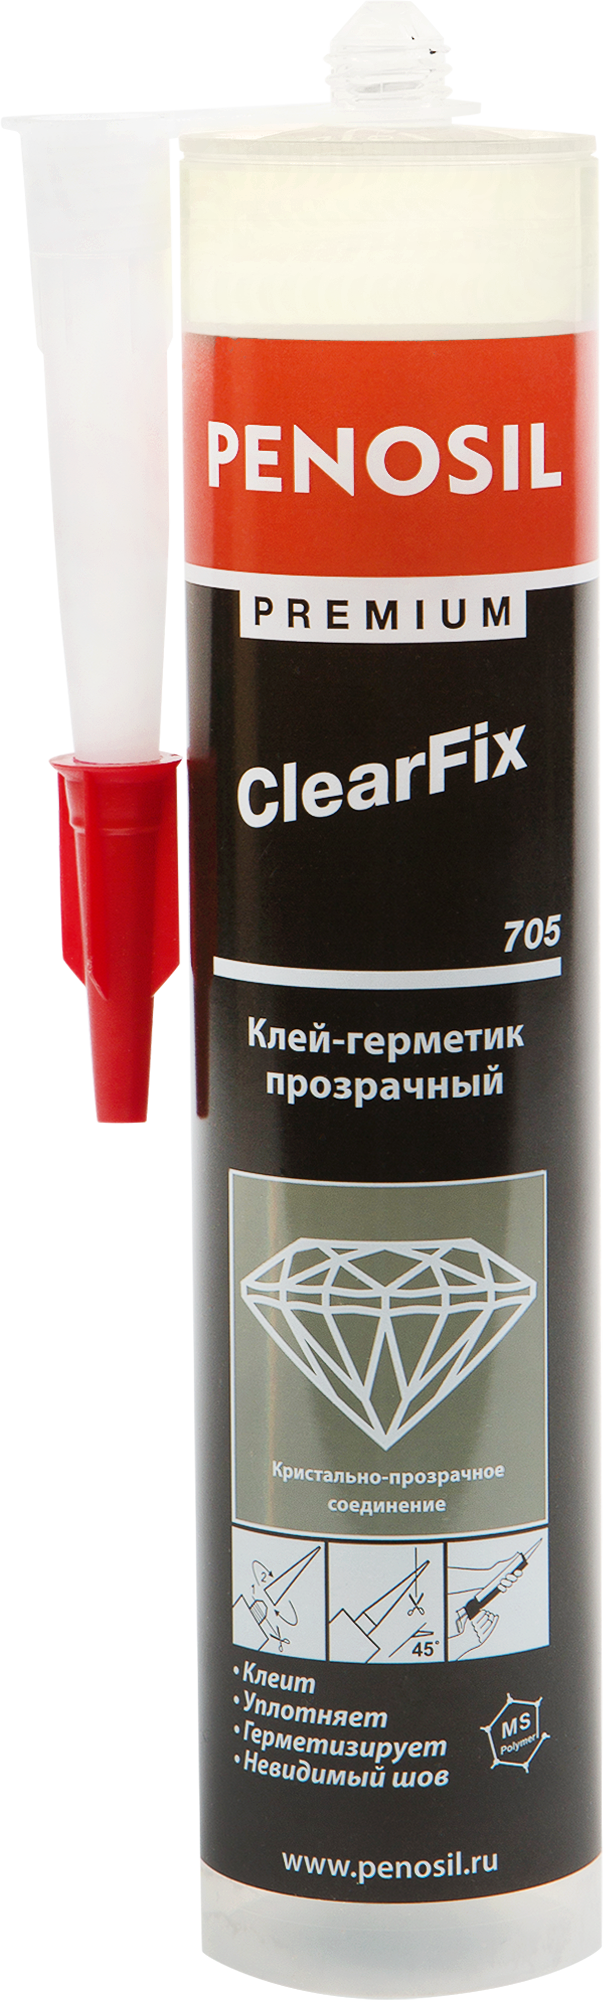 Clearfix